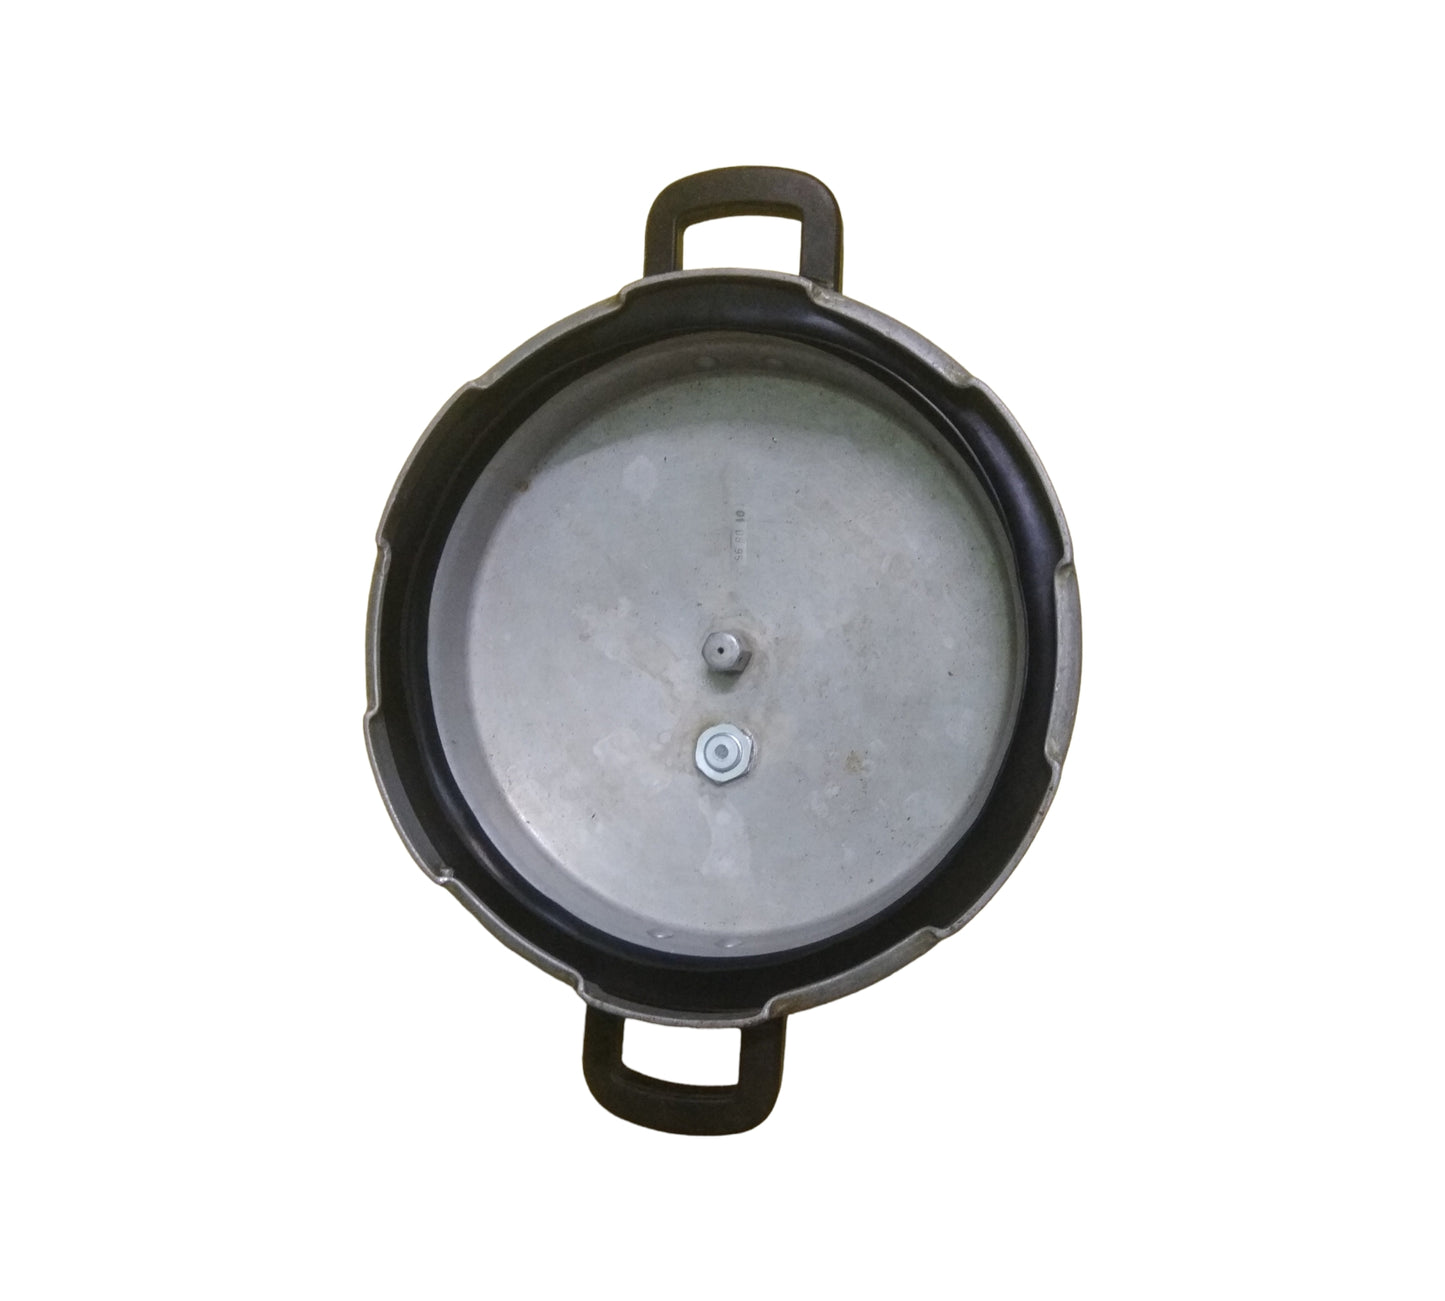 Cooker gasket suitable for Popular 5 Litre Pressure Cooker - Faritha